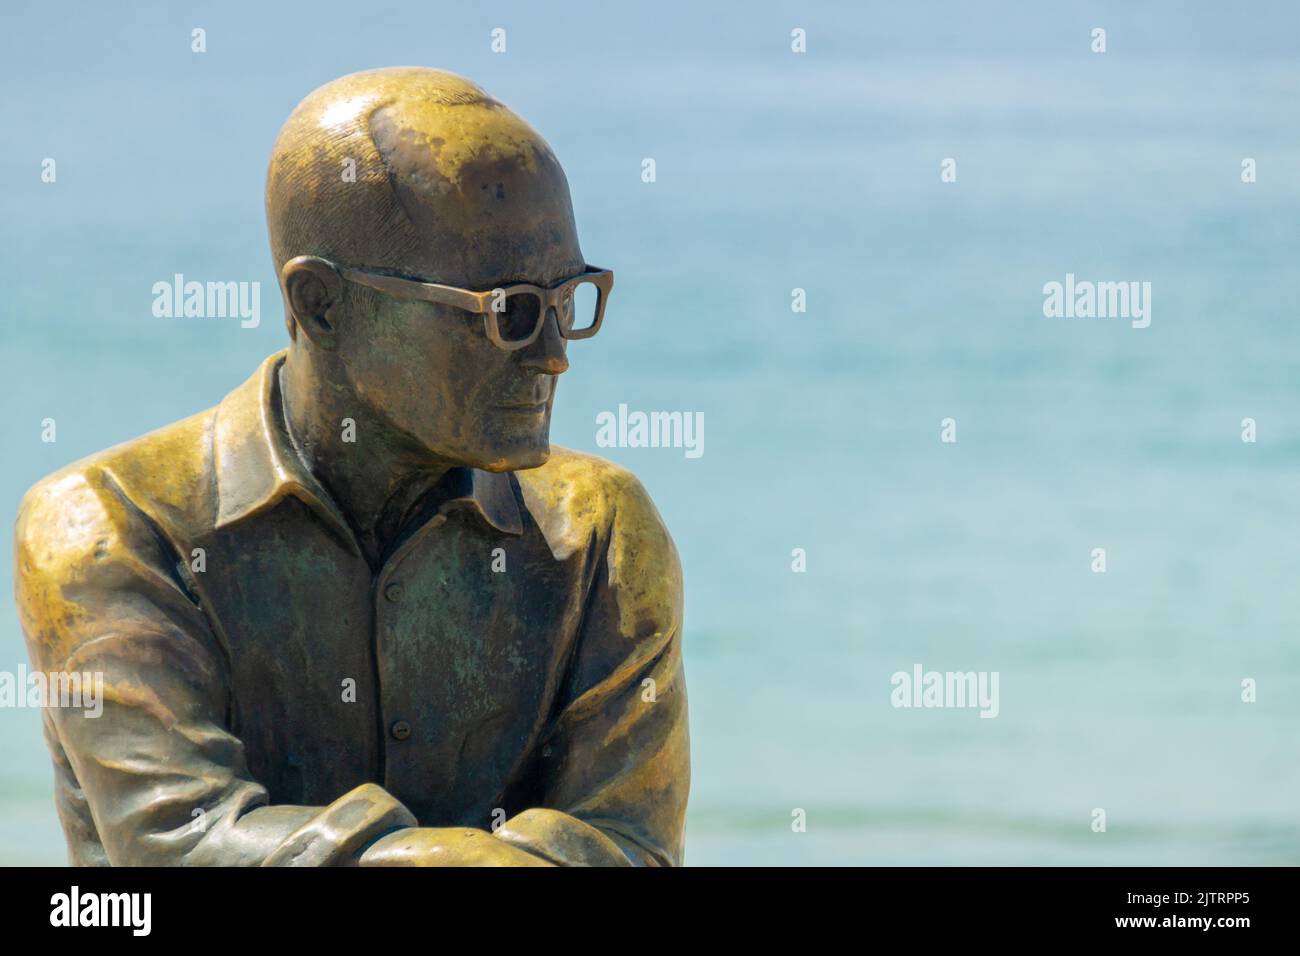 Statue of the poet Carlos Drummond de Andrade in Rio de Janeiro, Brazil - April 19, 2020: Statue of the poet Carlos Drummond de Andrade at Copacabana Stock Photo